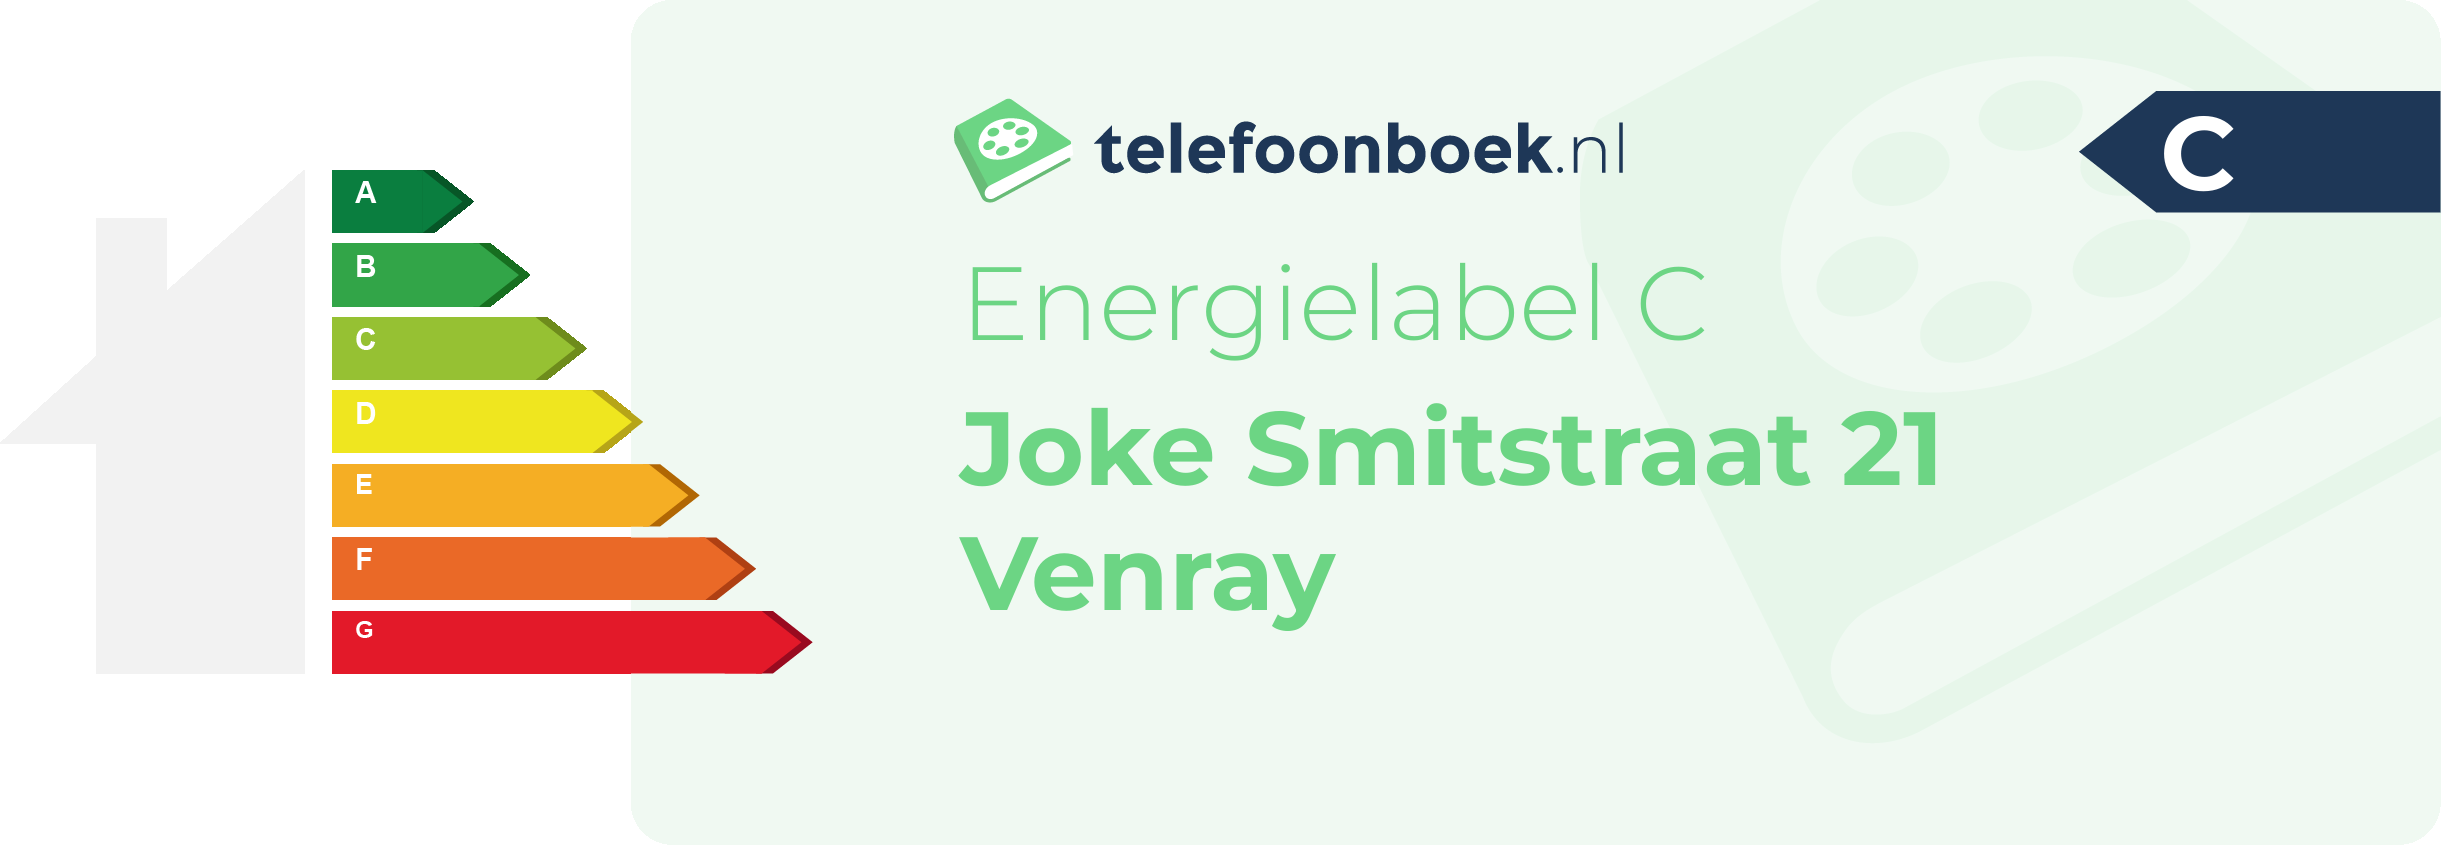 Energielabel Joke Smitstraat 21 Venray